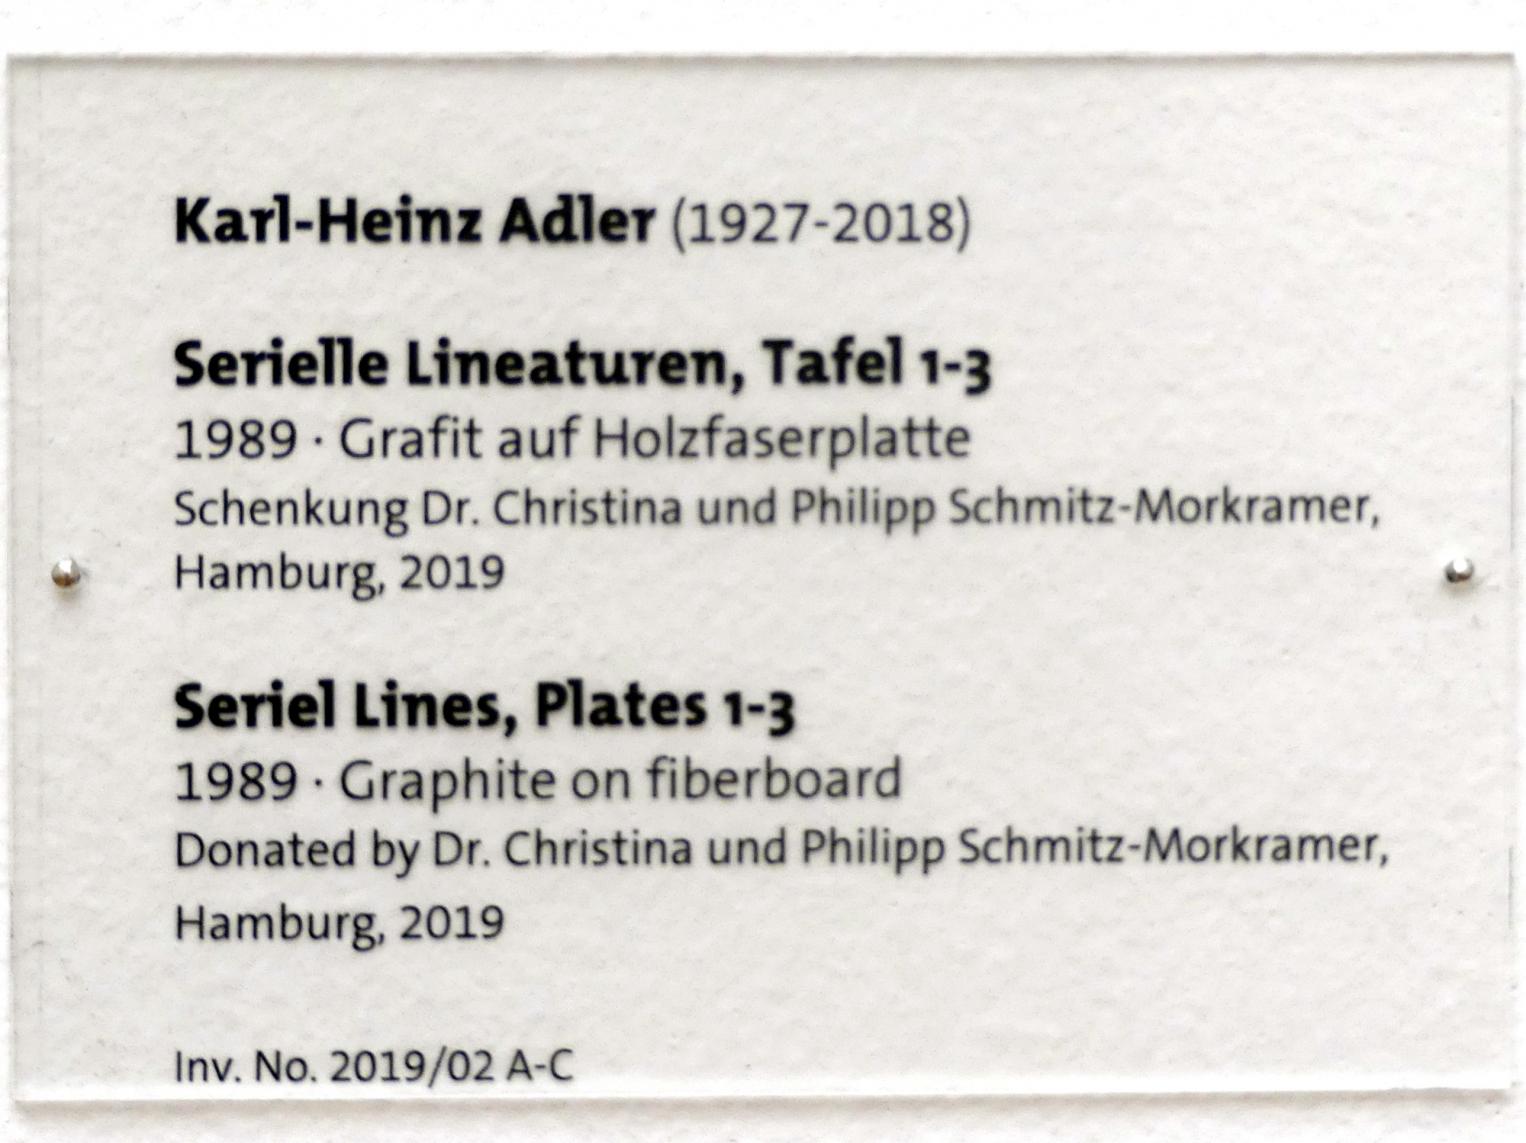 Karl-Heinz Adler (1987–1992), Serielle Lineaturen, Tafel 1-3, Dresden, Albertinum, Galerie Neue Meister, 2. Obergeschoss, Saal 18, 1989, Bild 2/2